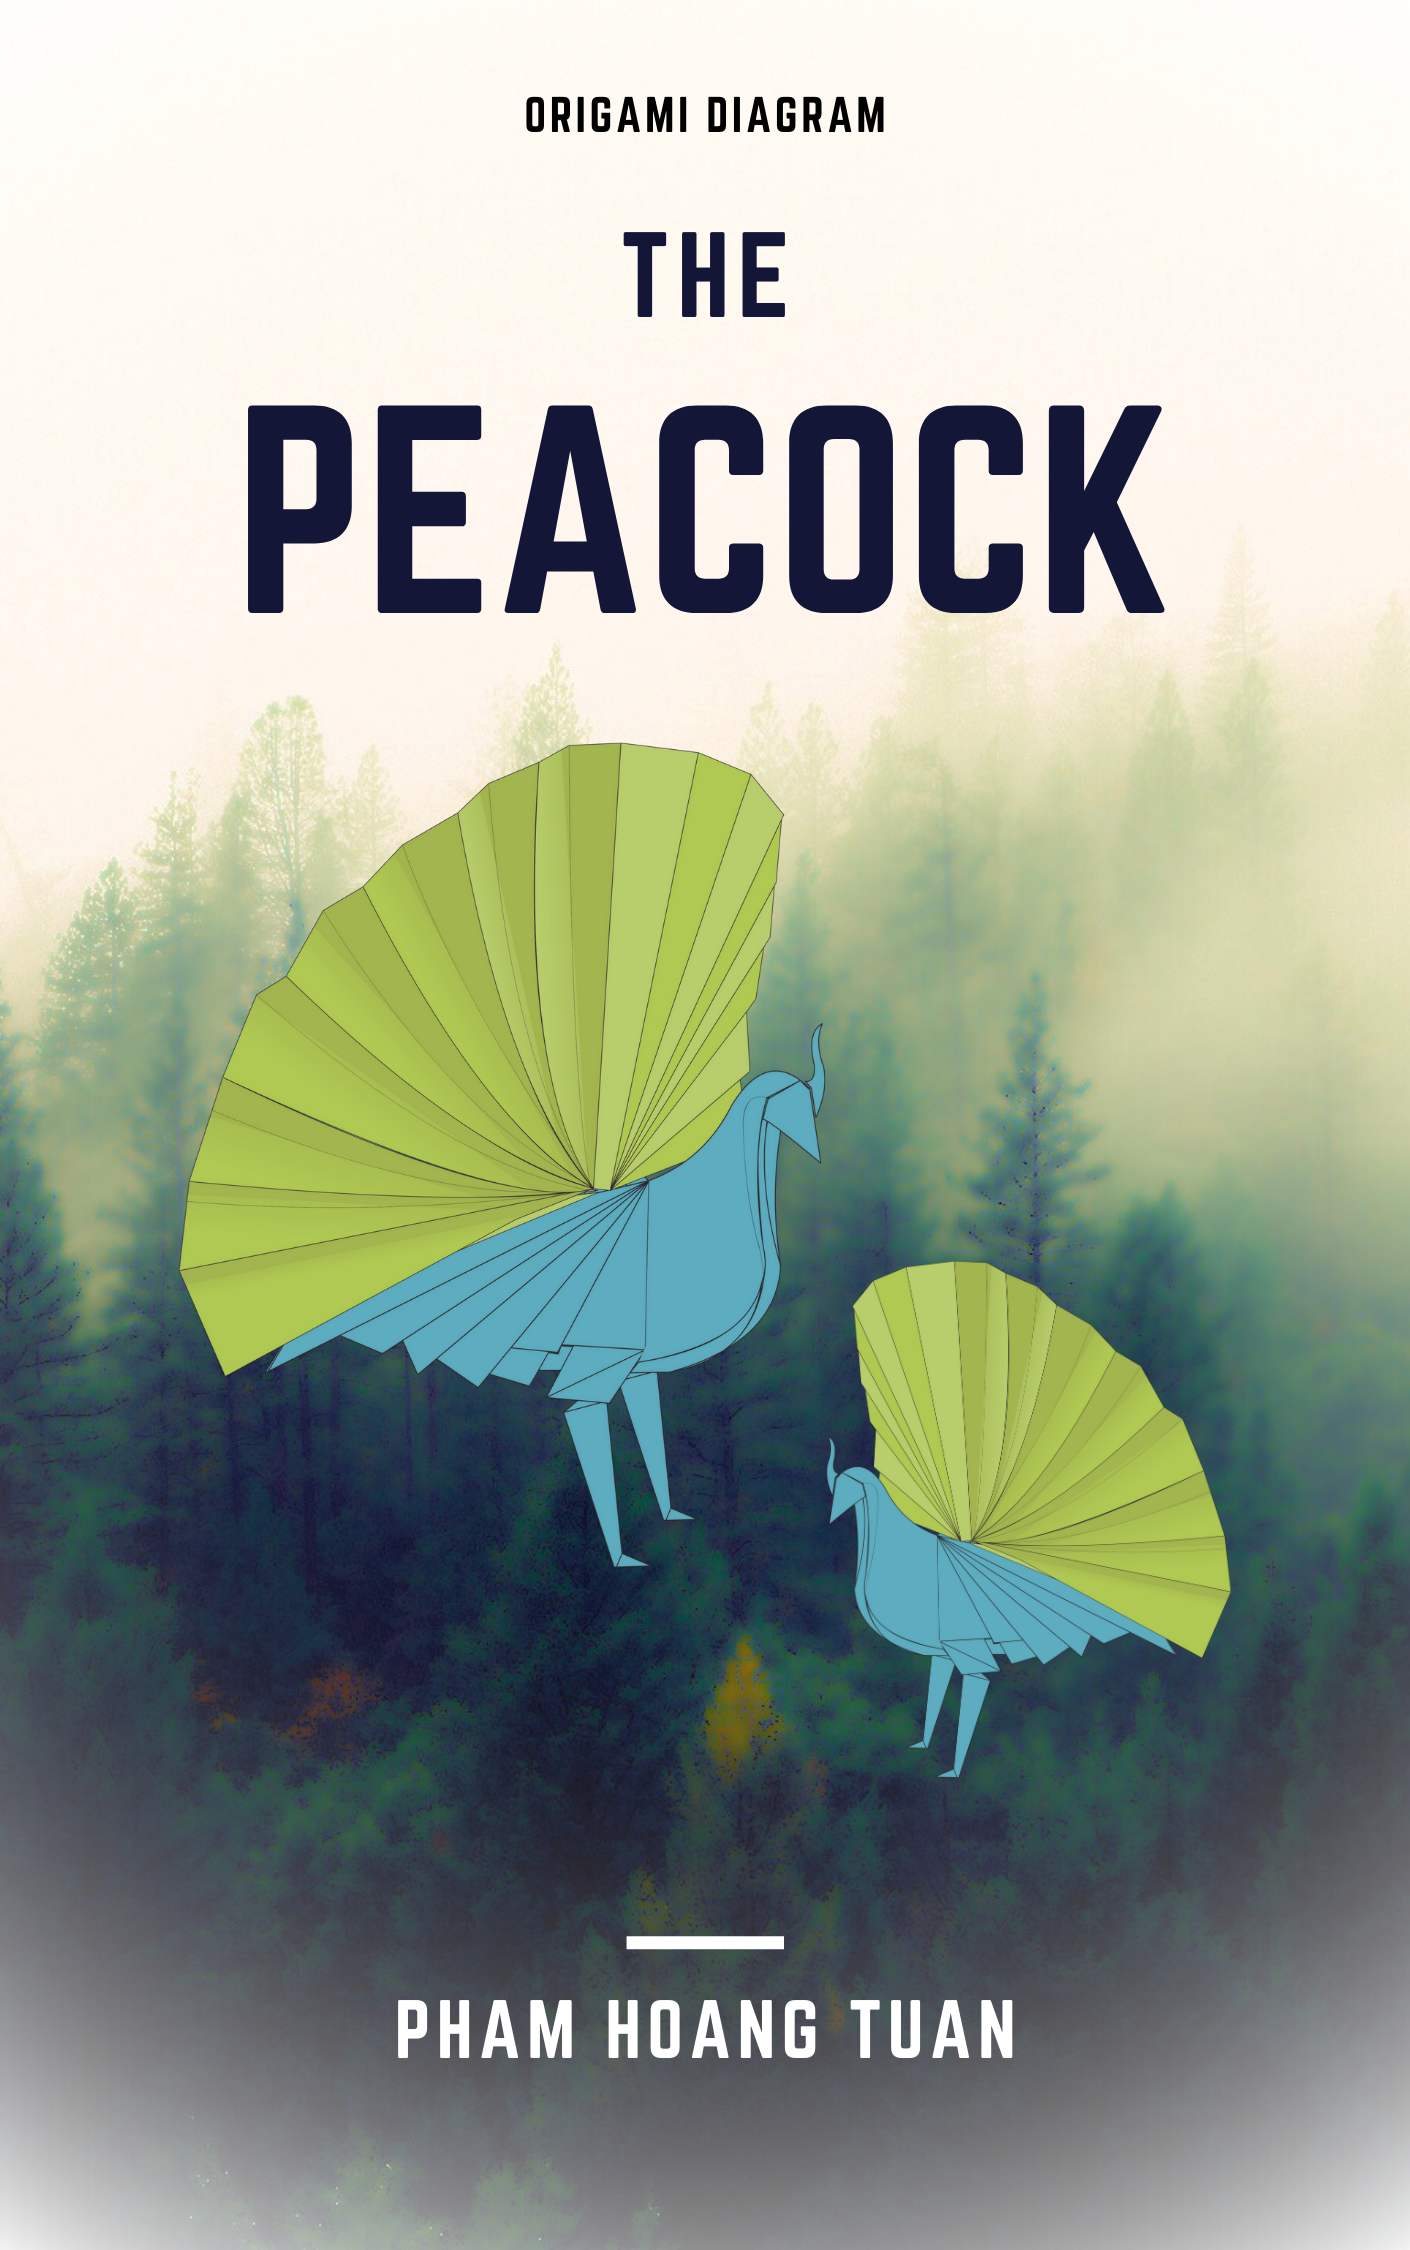 Origami Peacock Instruction Diagram - Origami Peacock Ebook